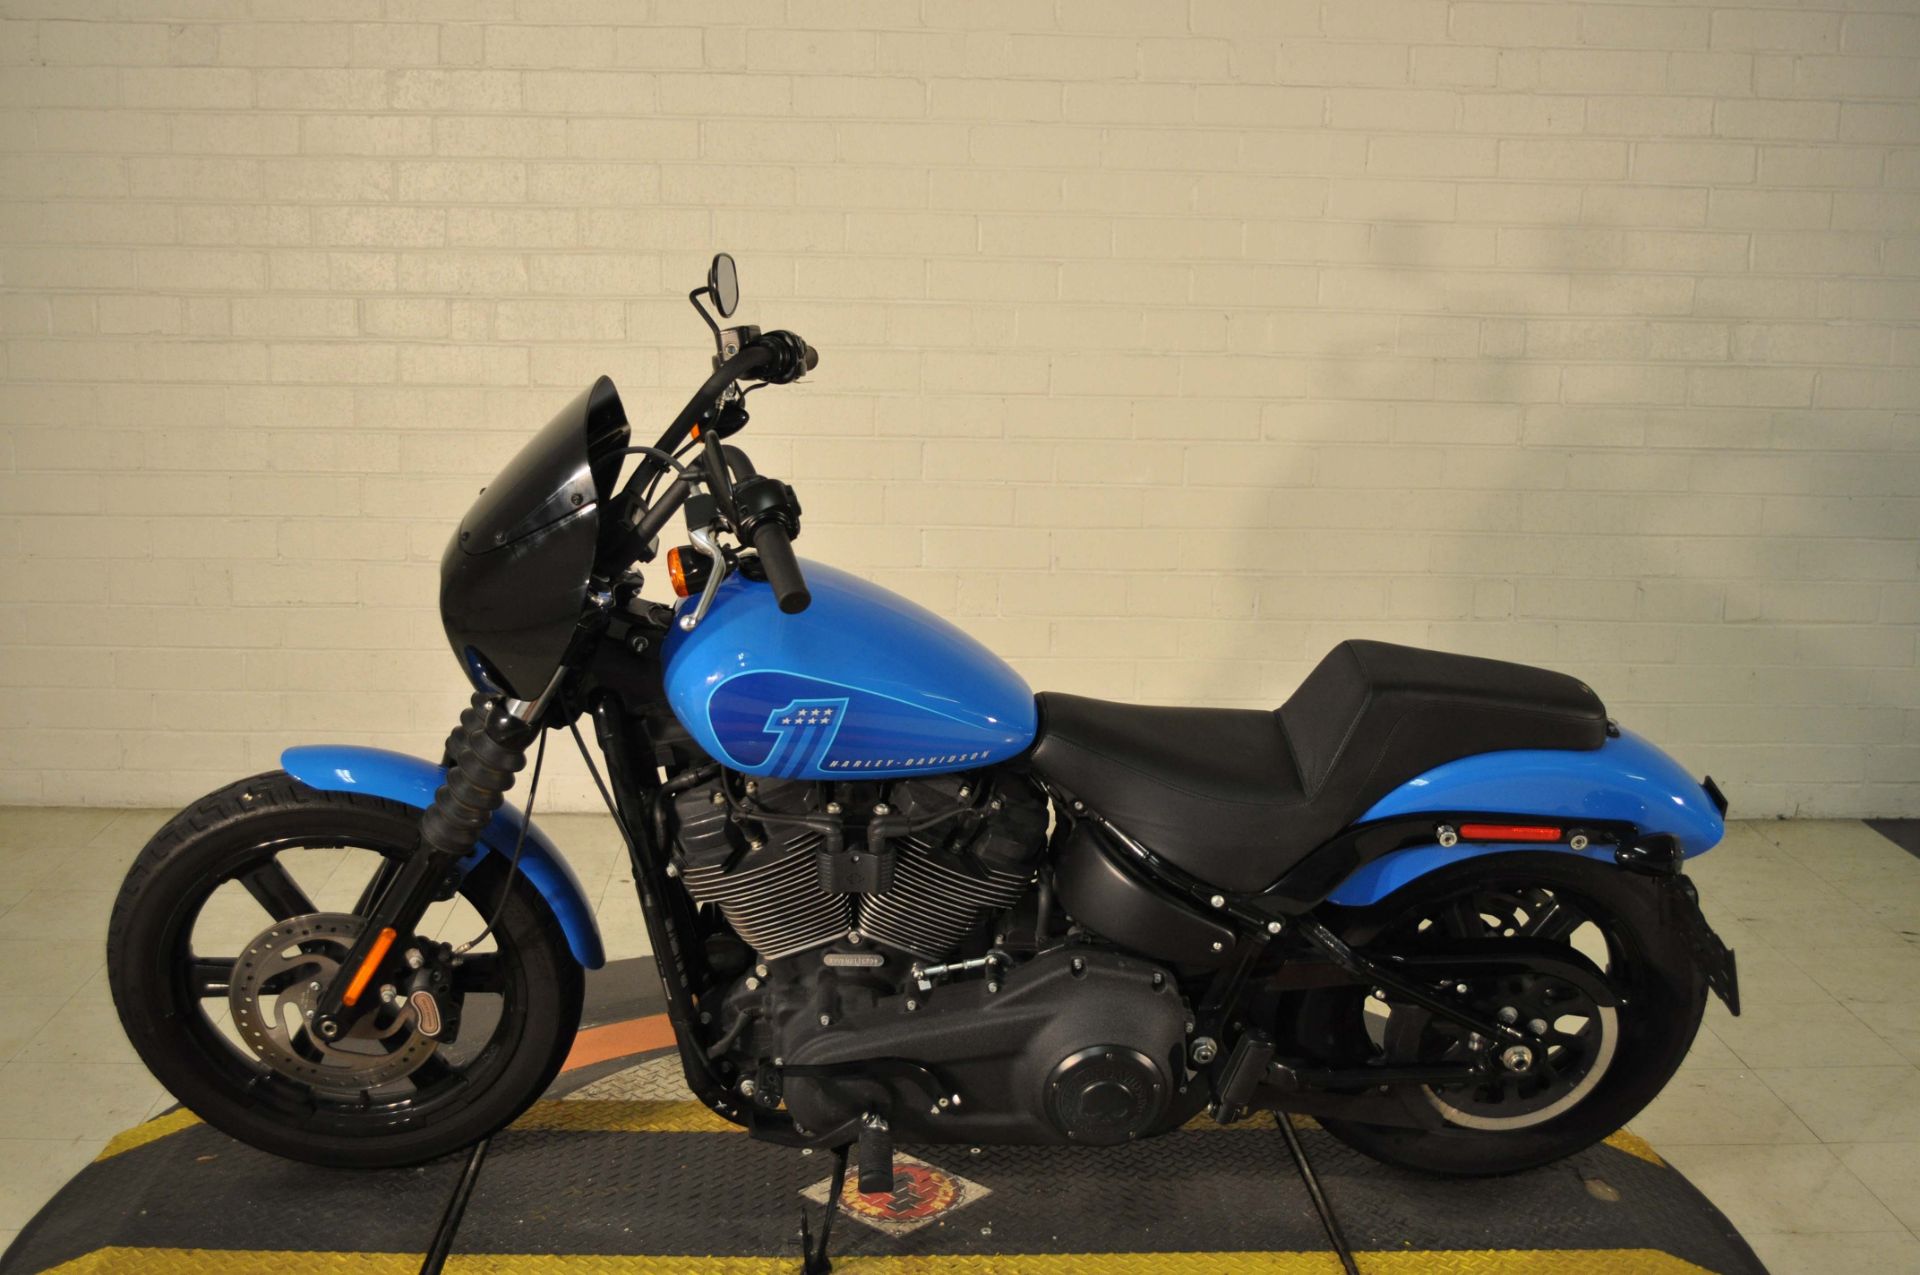 2022 Harley-Davidson Street Bob® 114 in Winston Salem, North Carolina - Photo 5